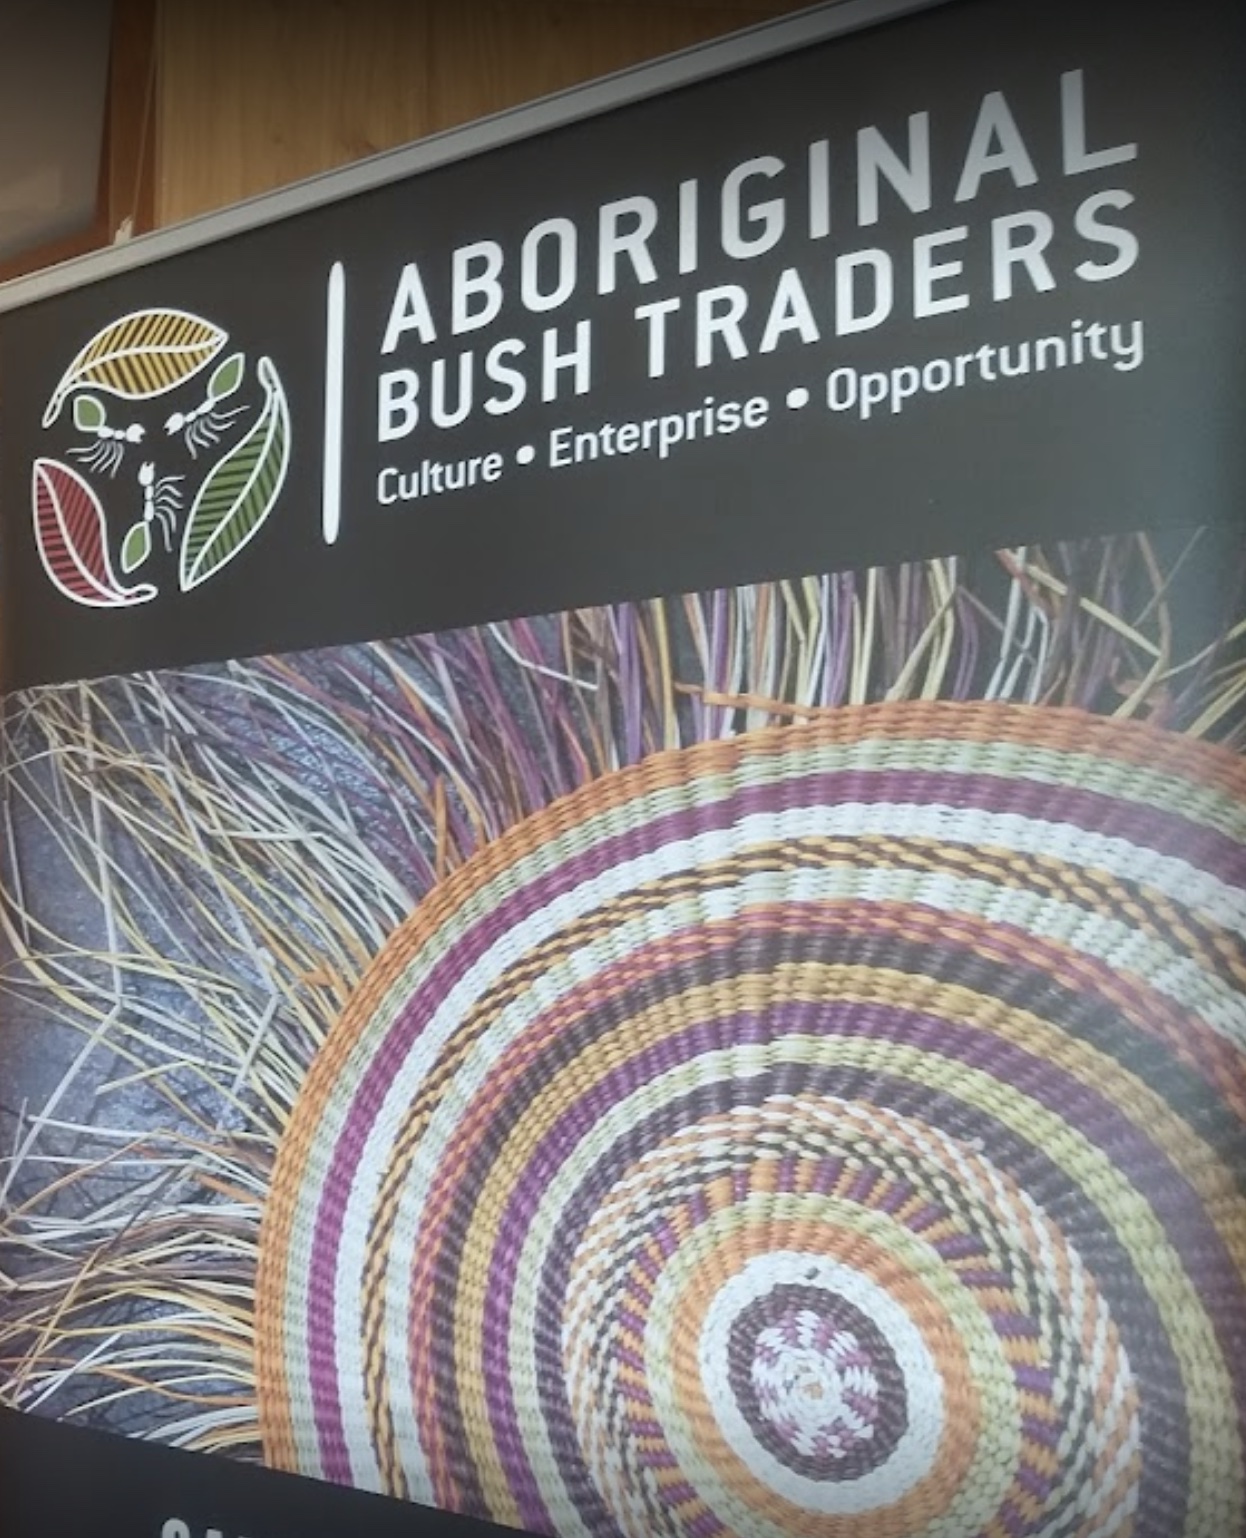 4-Hour Outback Gourmet Lunch & Aboriginal Art Tour, Visitor Centre Start